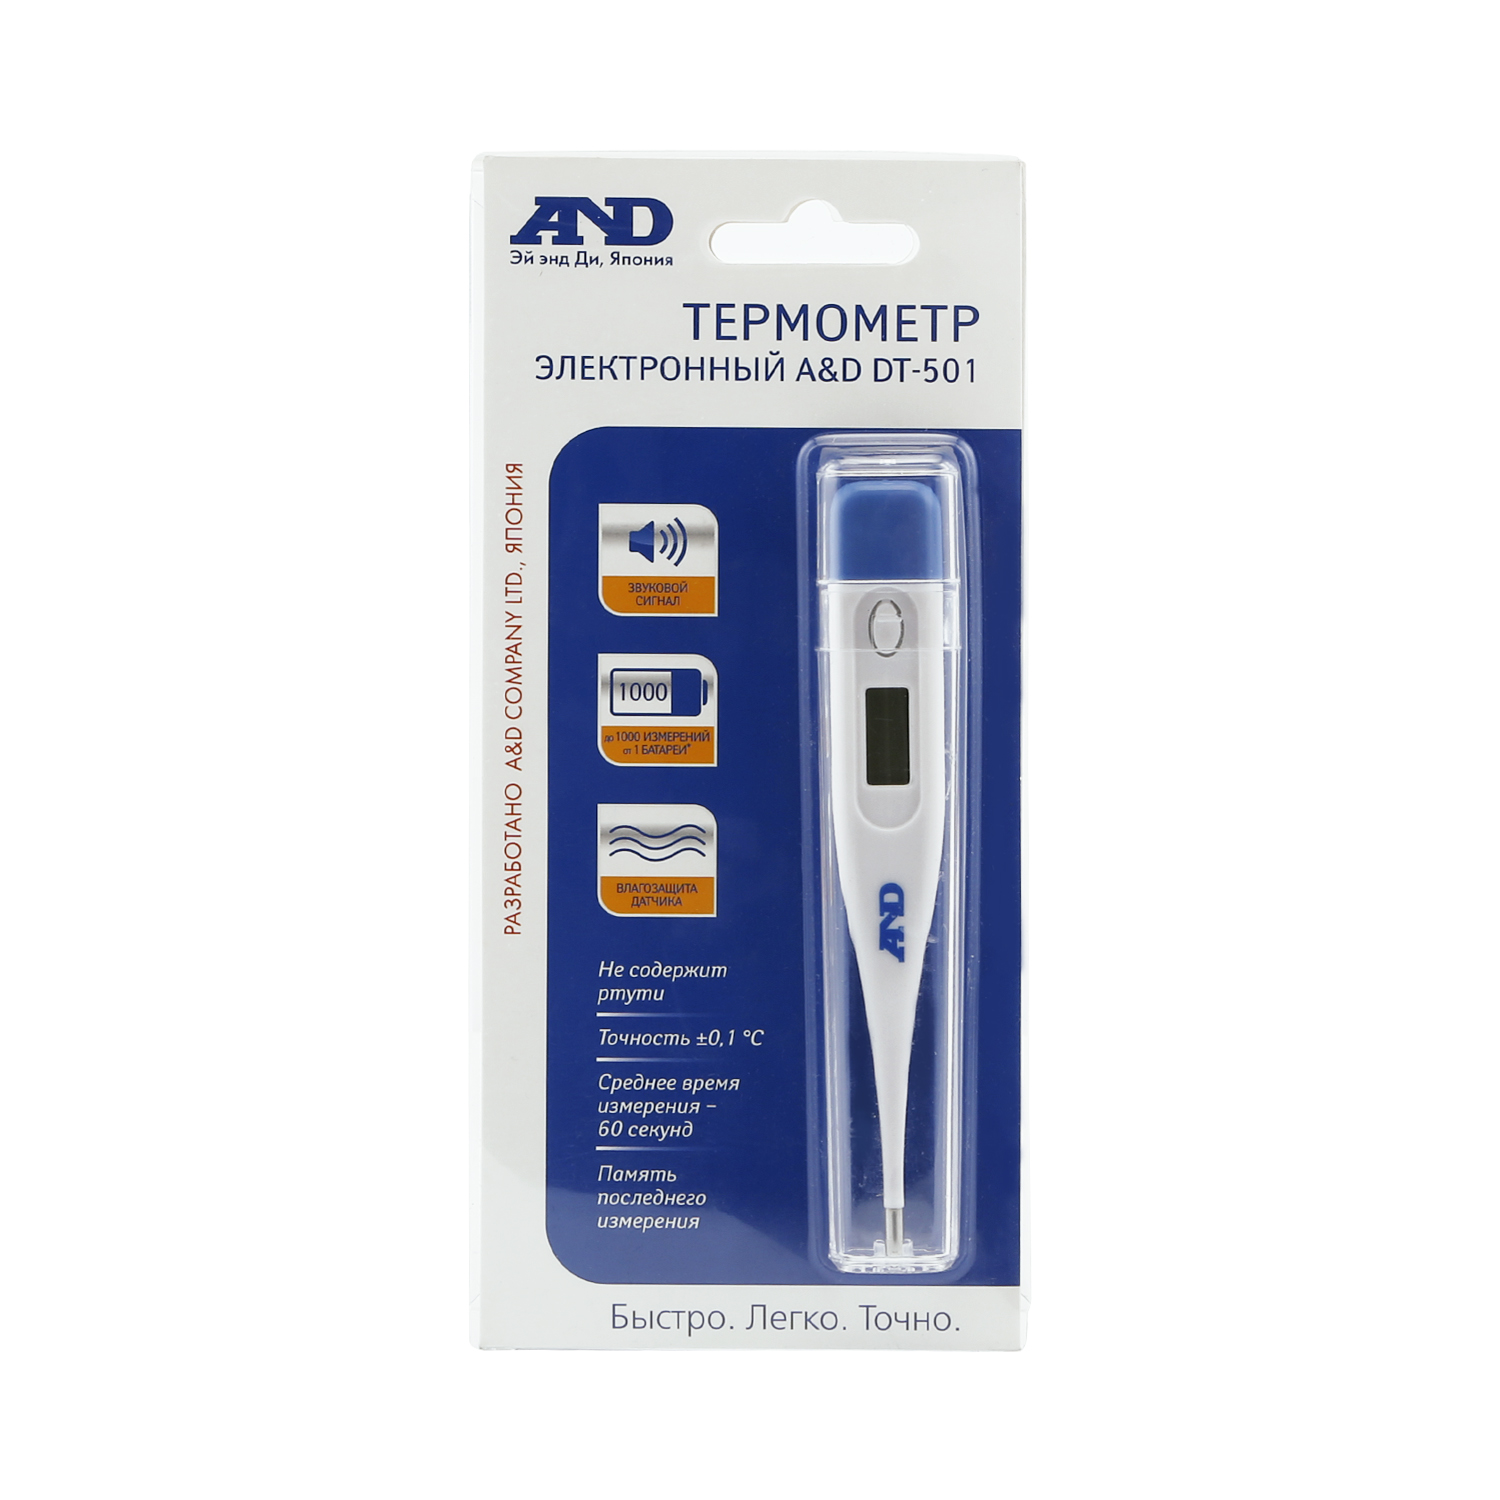 Эй энд Ди термометр DT-501 цифровой медицинский от Budzdorov